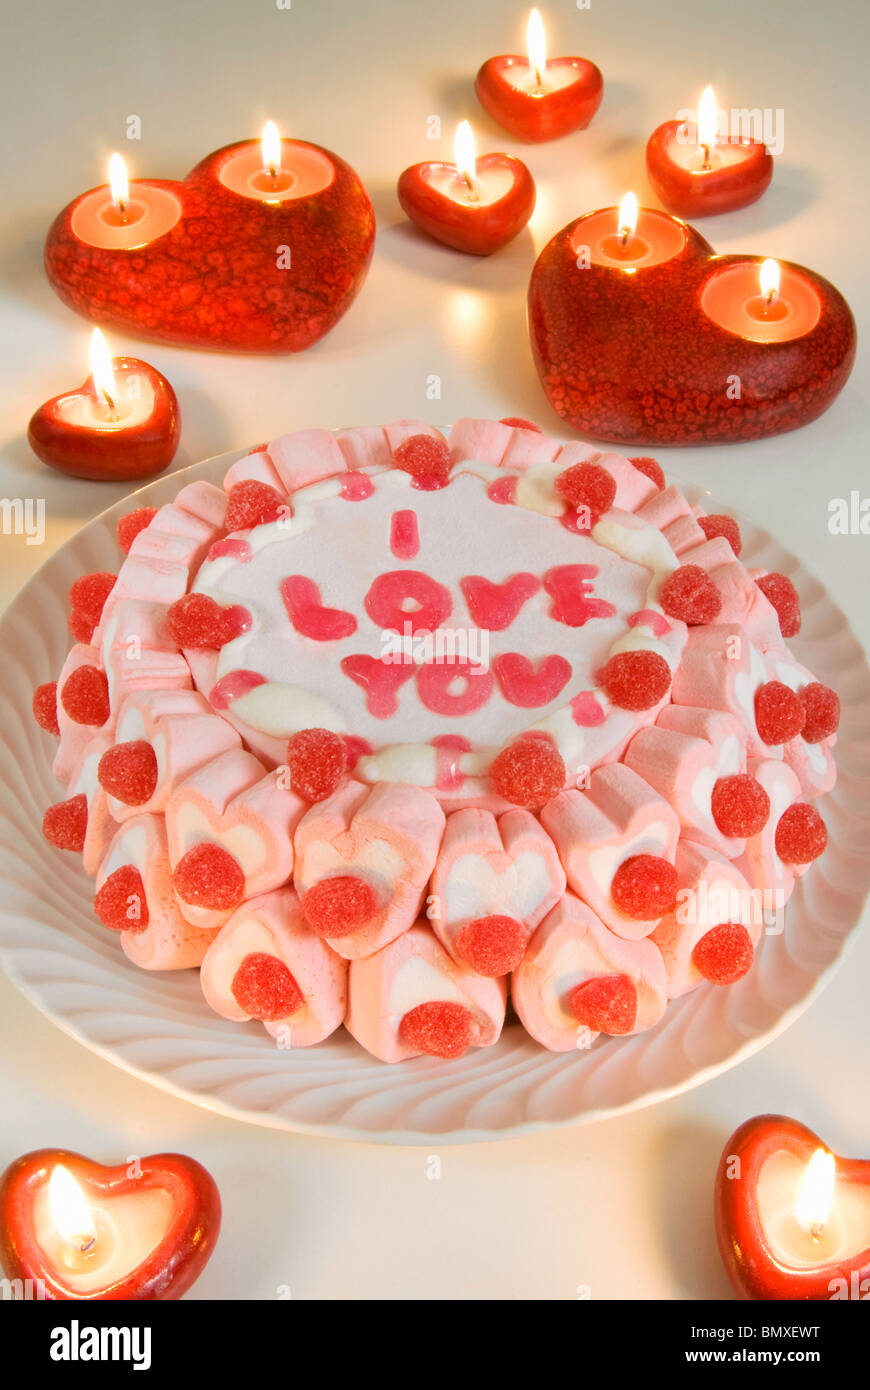 Cake, I love you, Stock Photo